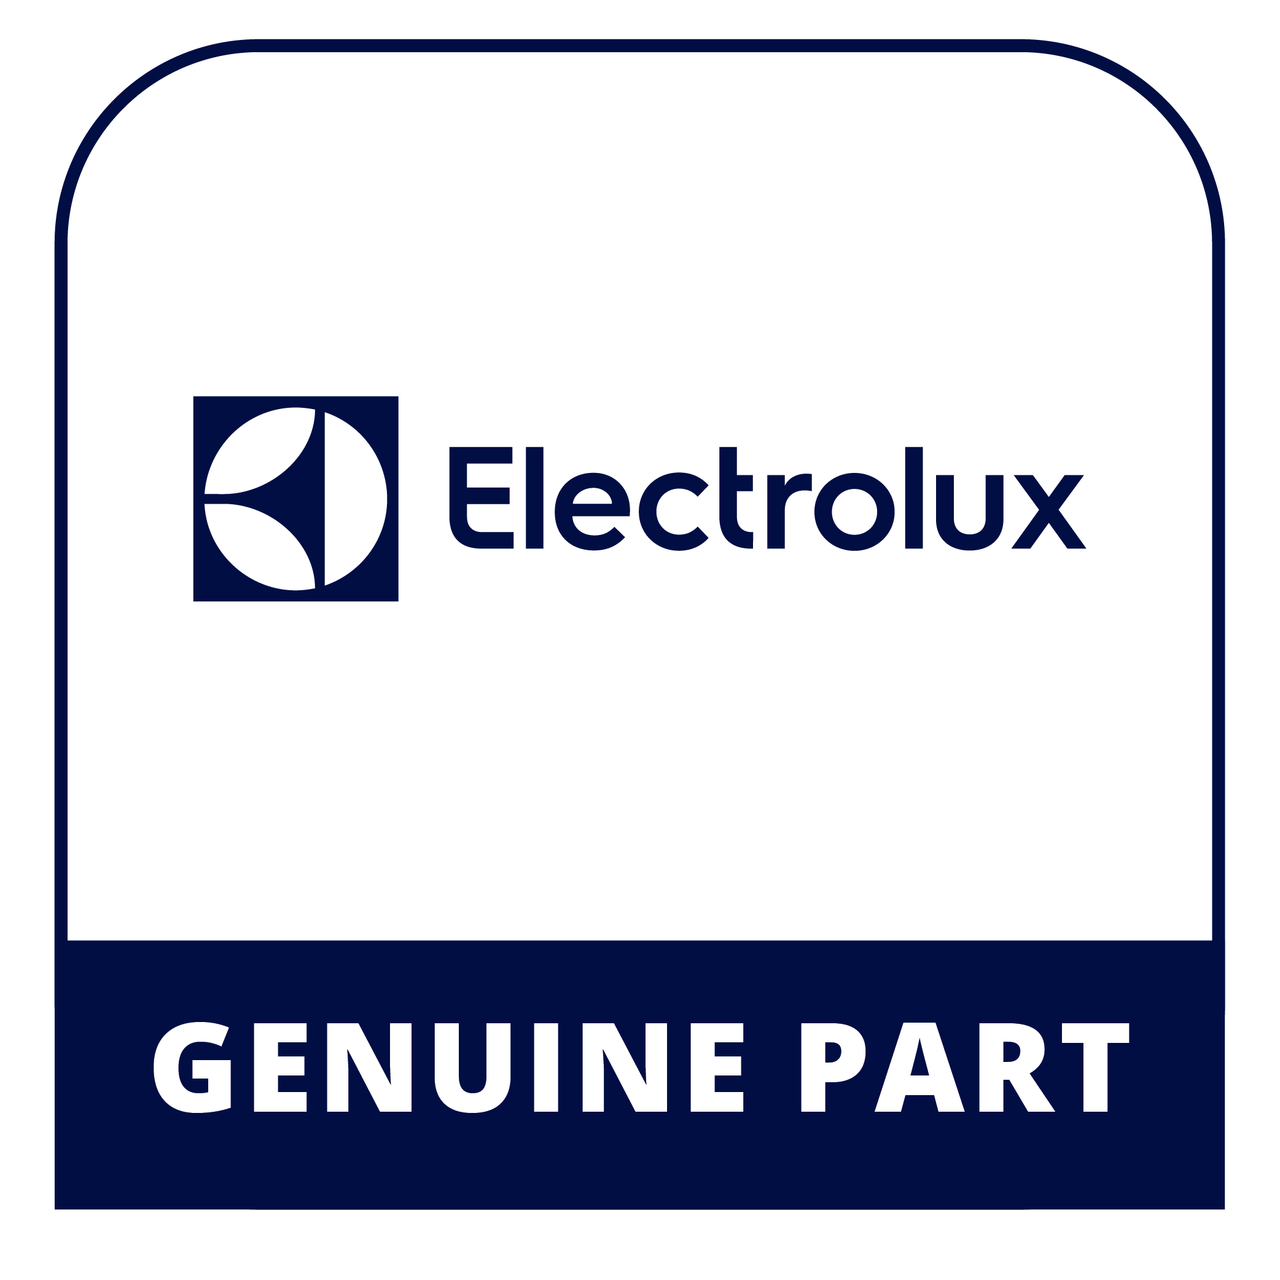 Frigidaire - Electrolux 318054701 Plate - Genuine Electrolux Part